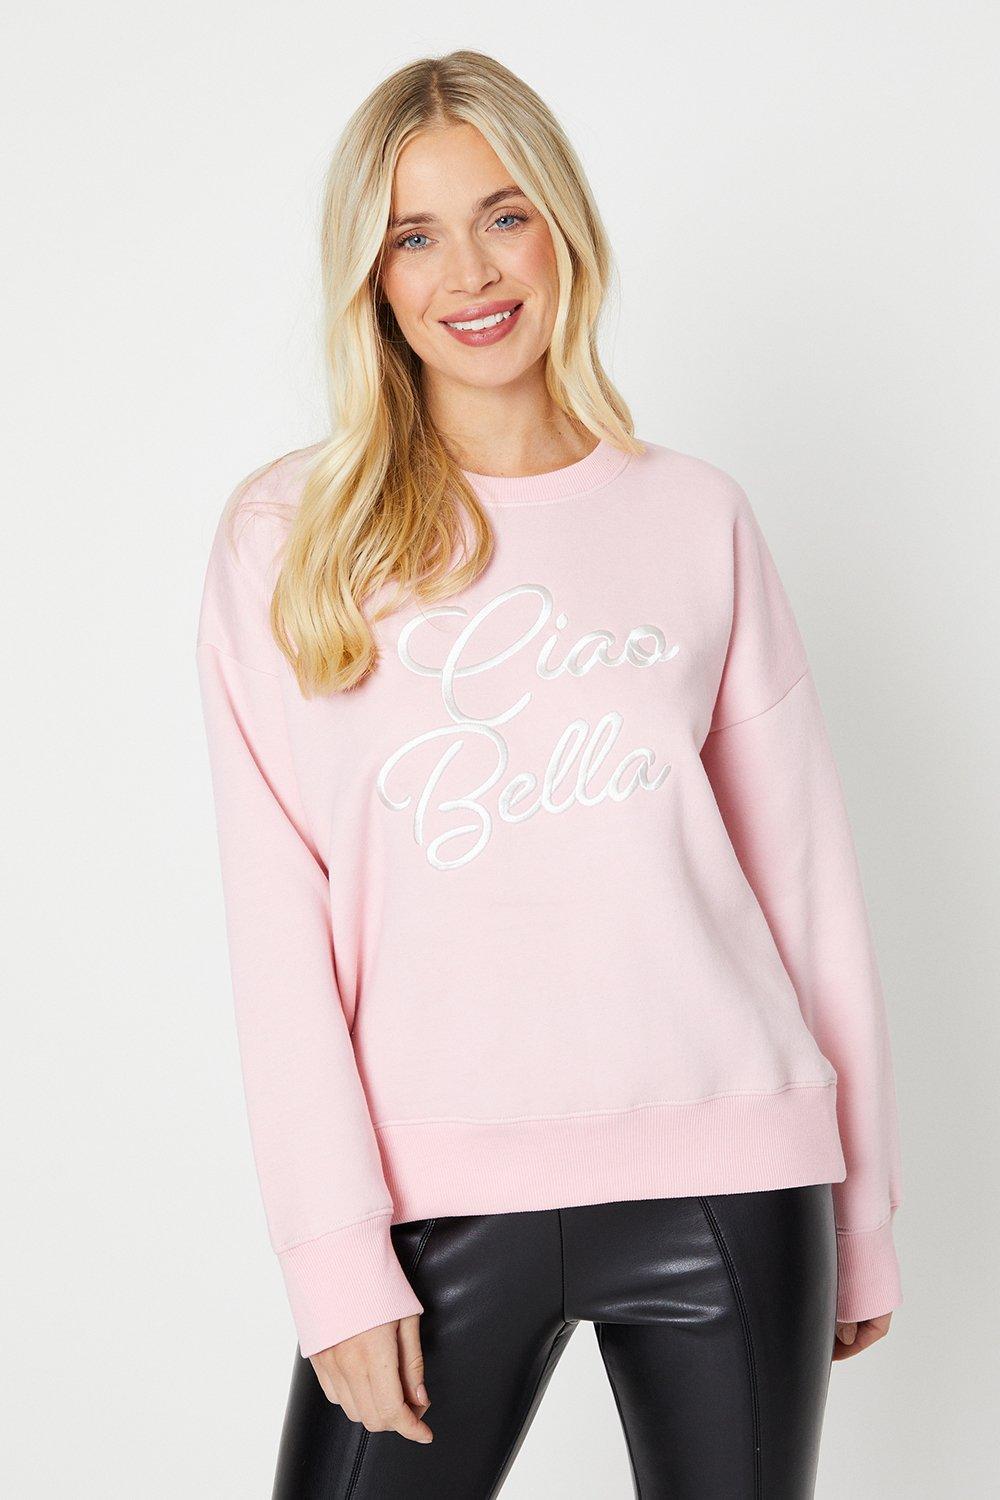 Women’s Petite Ciao Bella Sweatshirt - blush - M